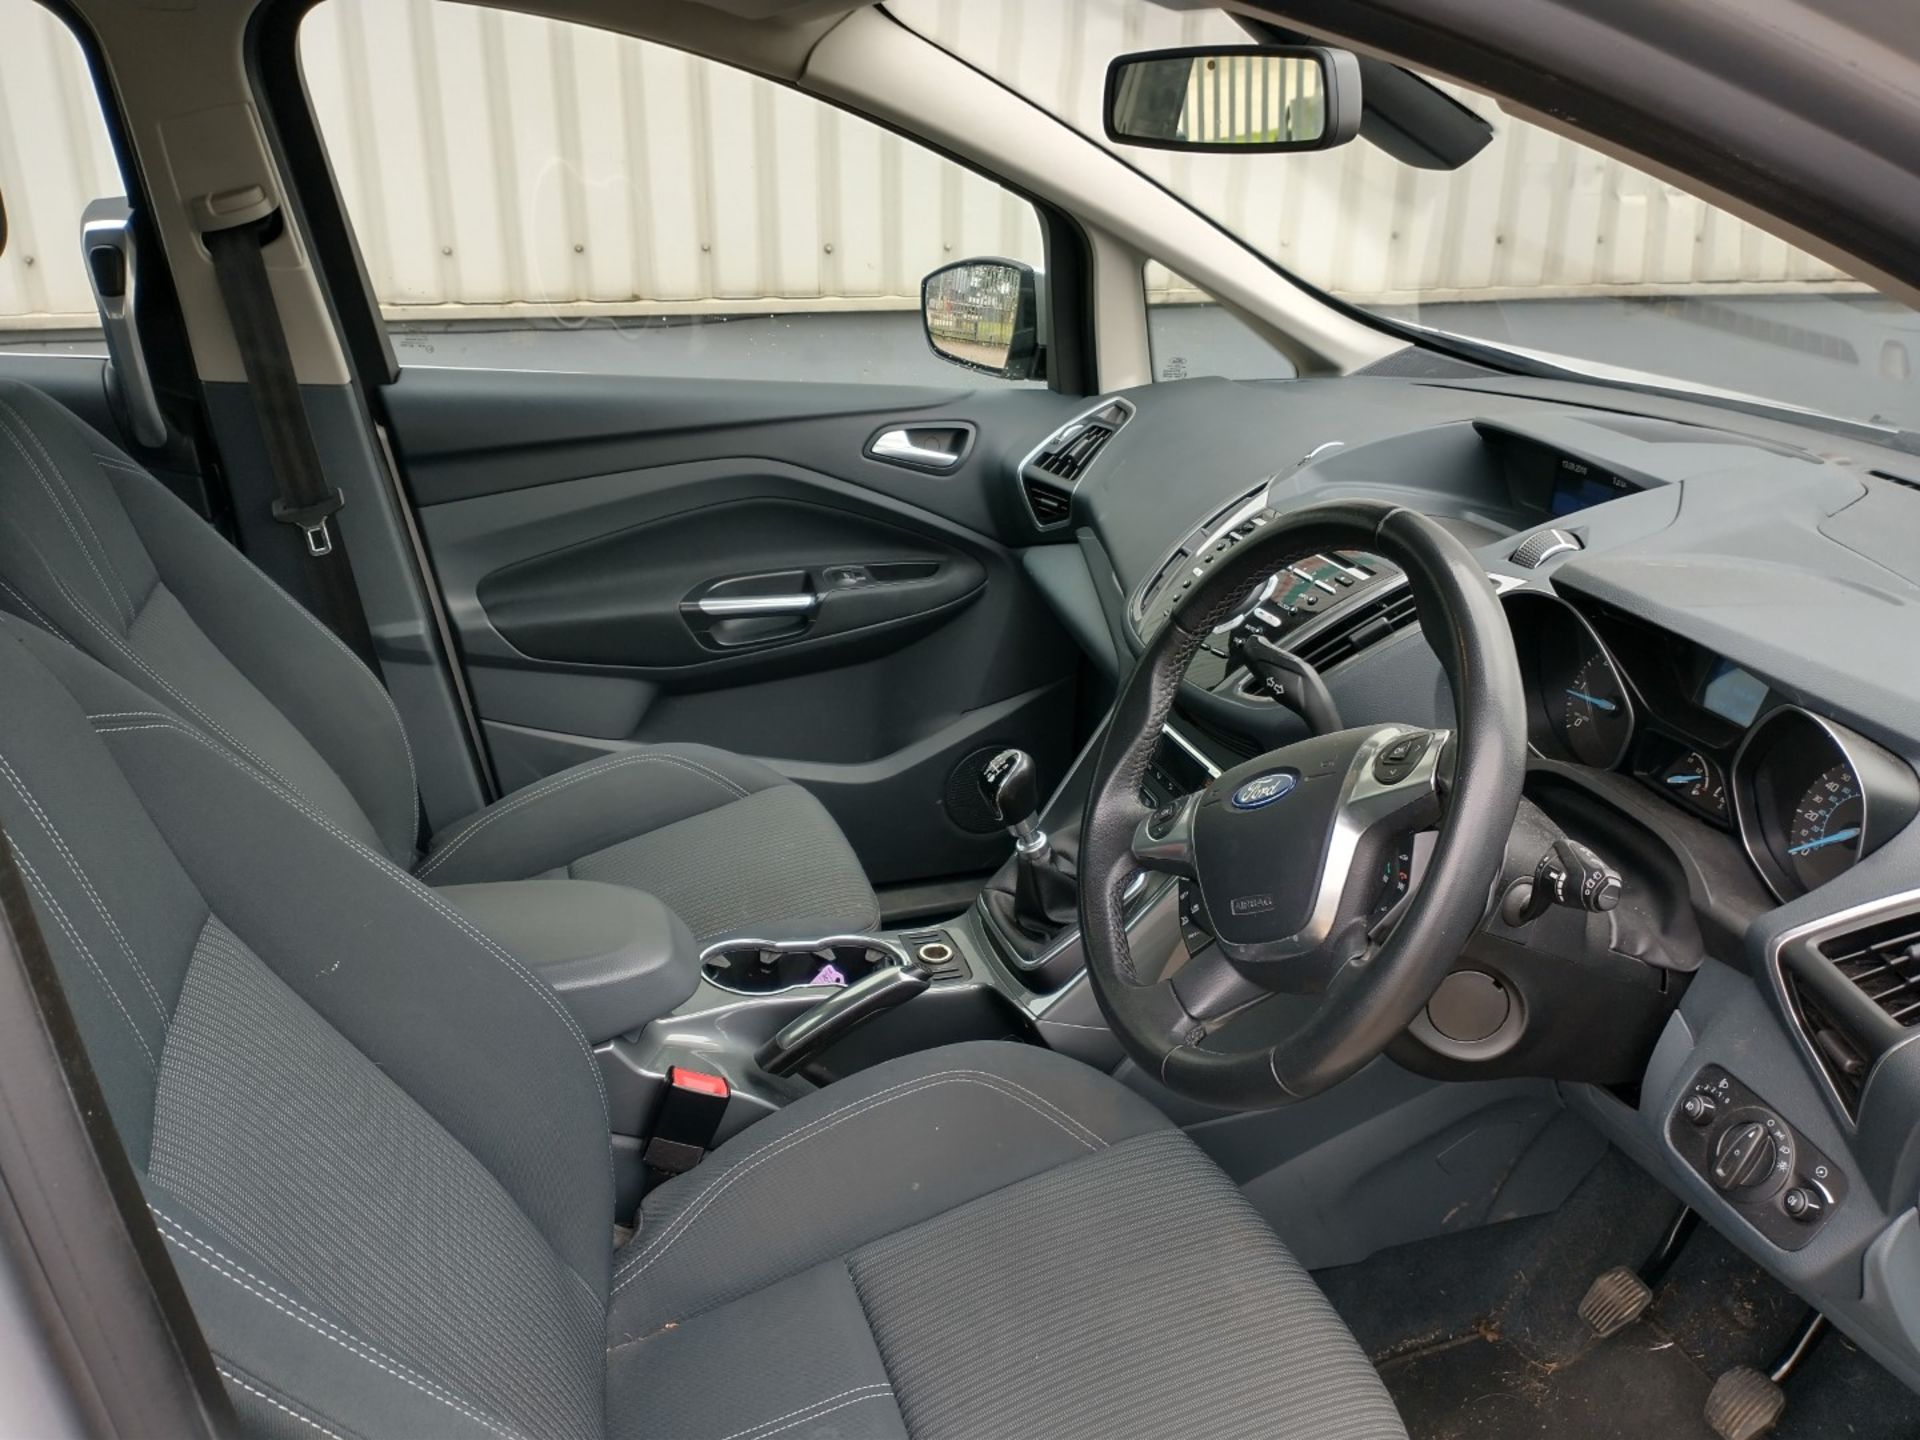 2012 Ford Grand C-Max Titanium Tdci 115 7 Seat MPV - CL505 - Ref: VVS0002 - NO VAT ON THE HAMMER - L - Image 9 of 24